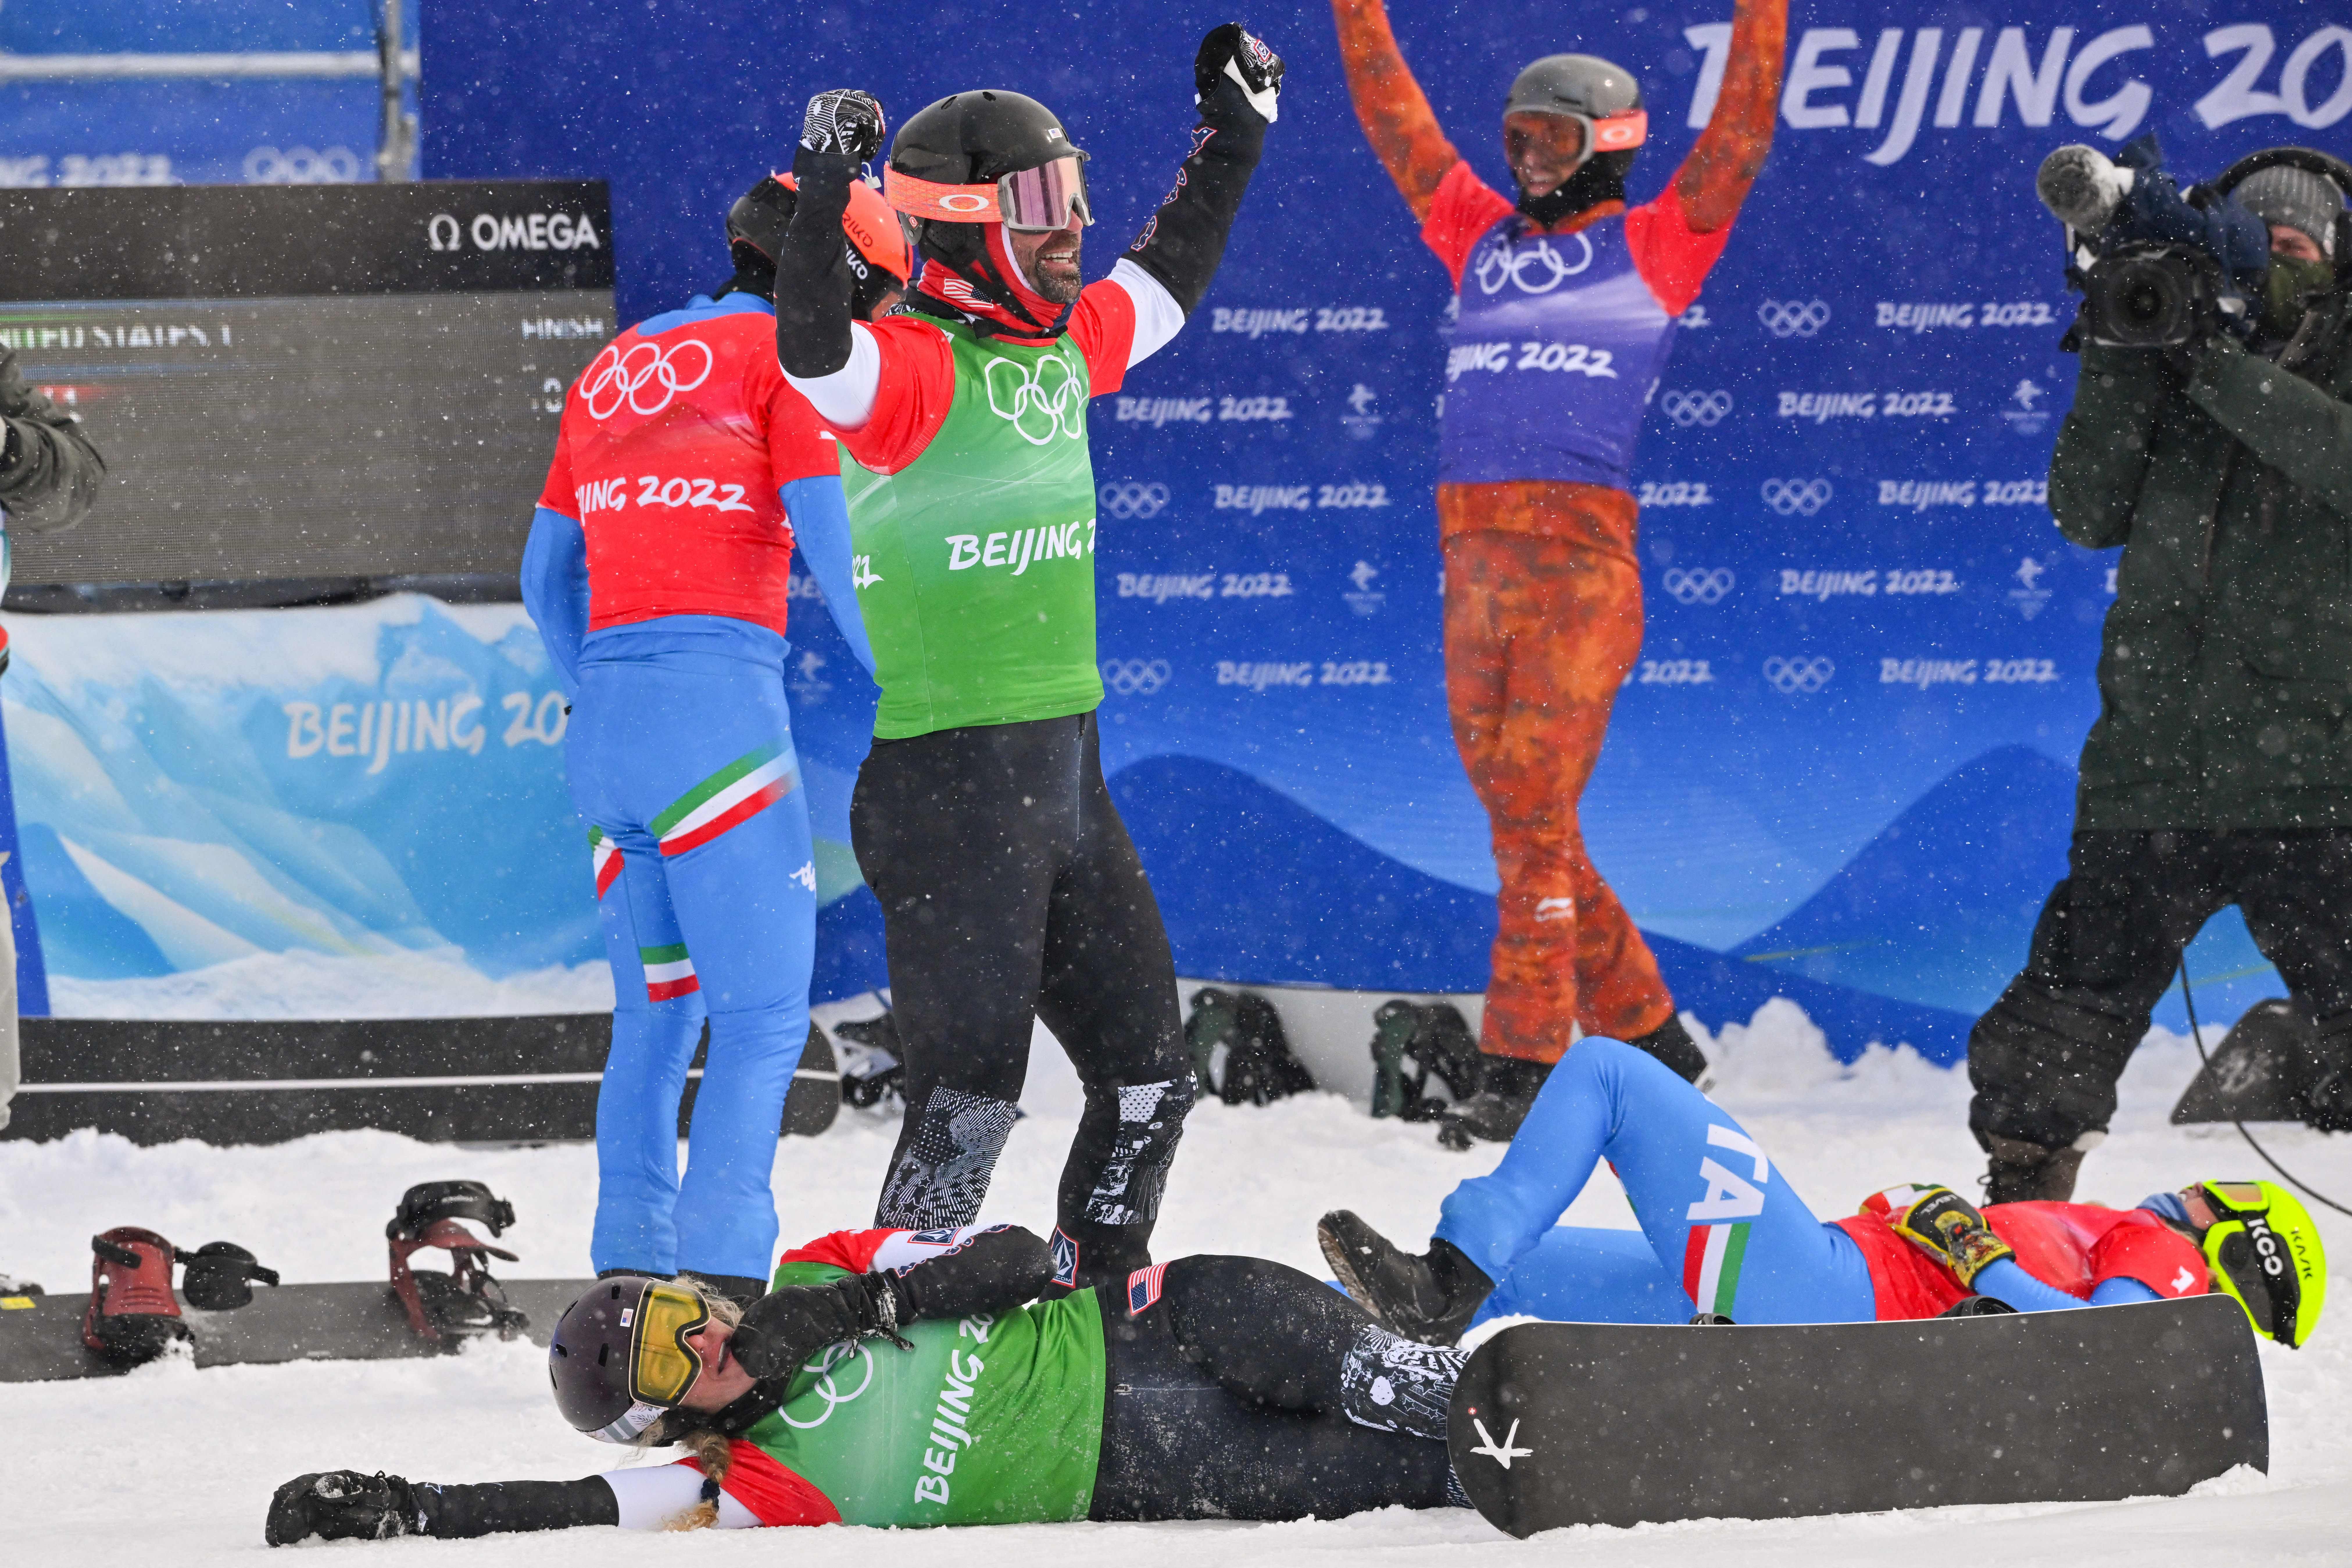 Vermont's Jacobellis golden again, wins mixed snowboard cross in Beijing - The Boston Globe